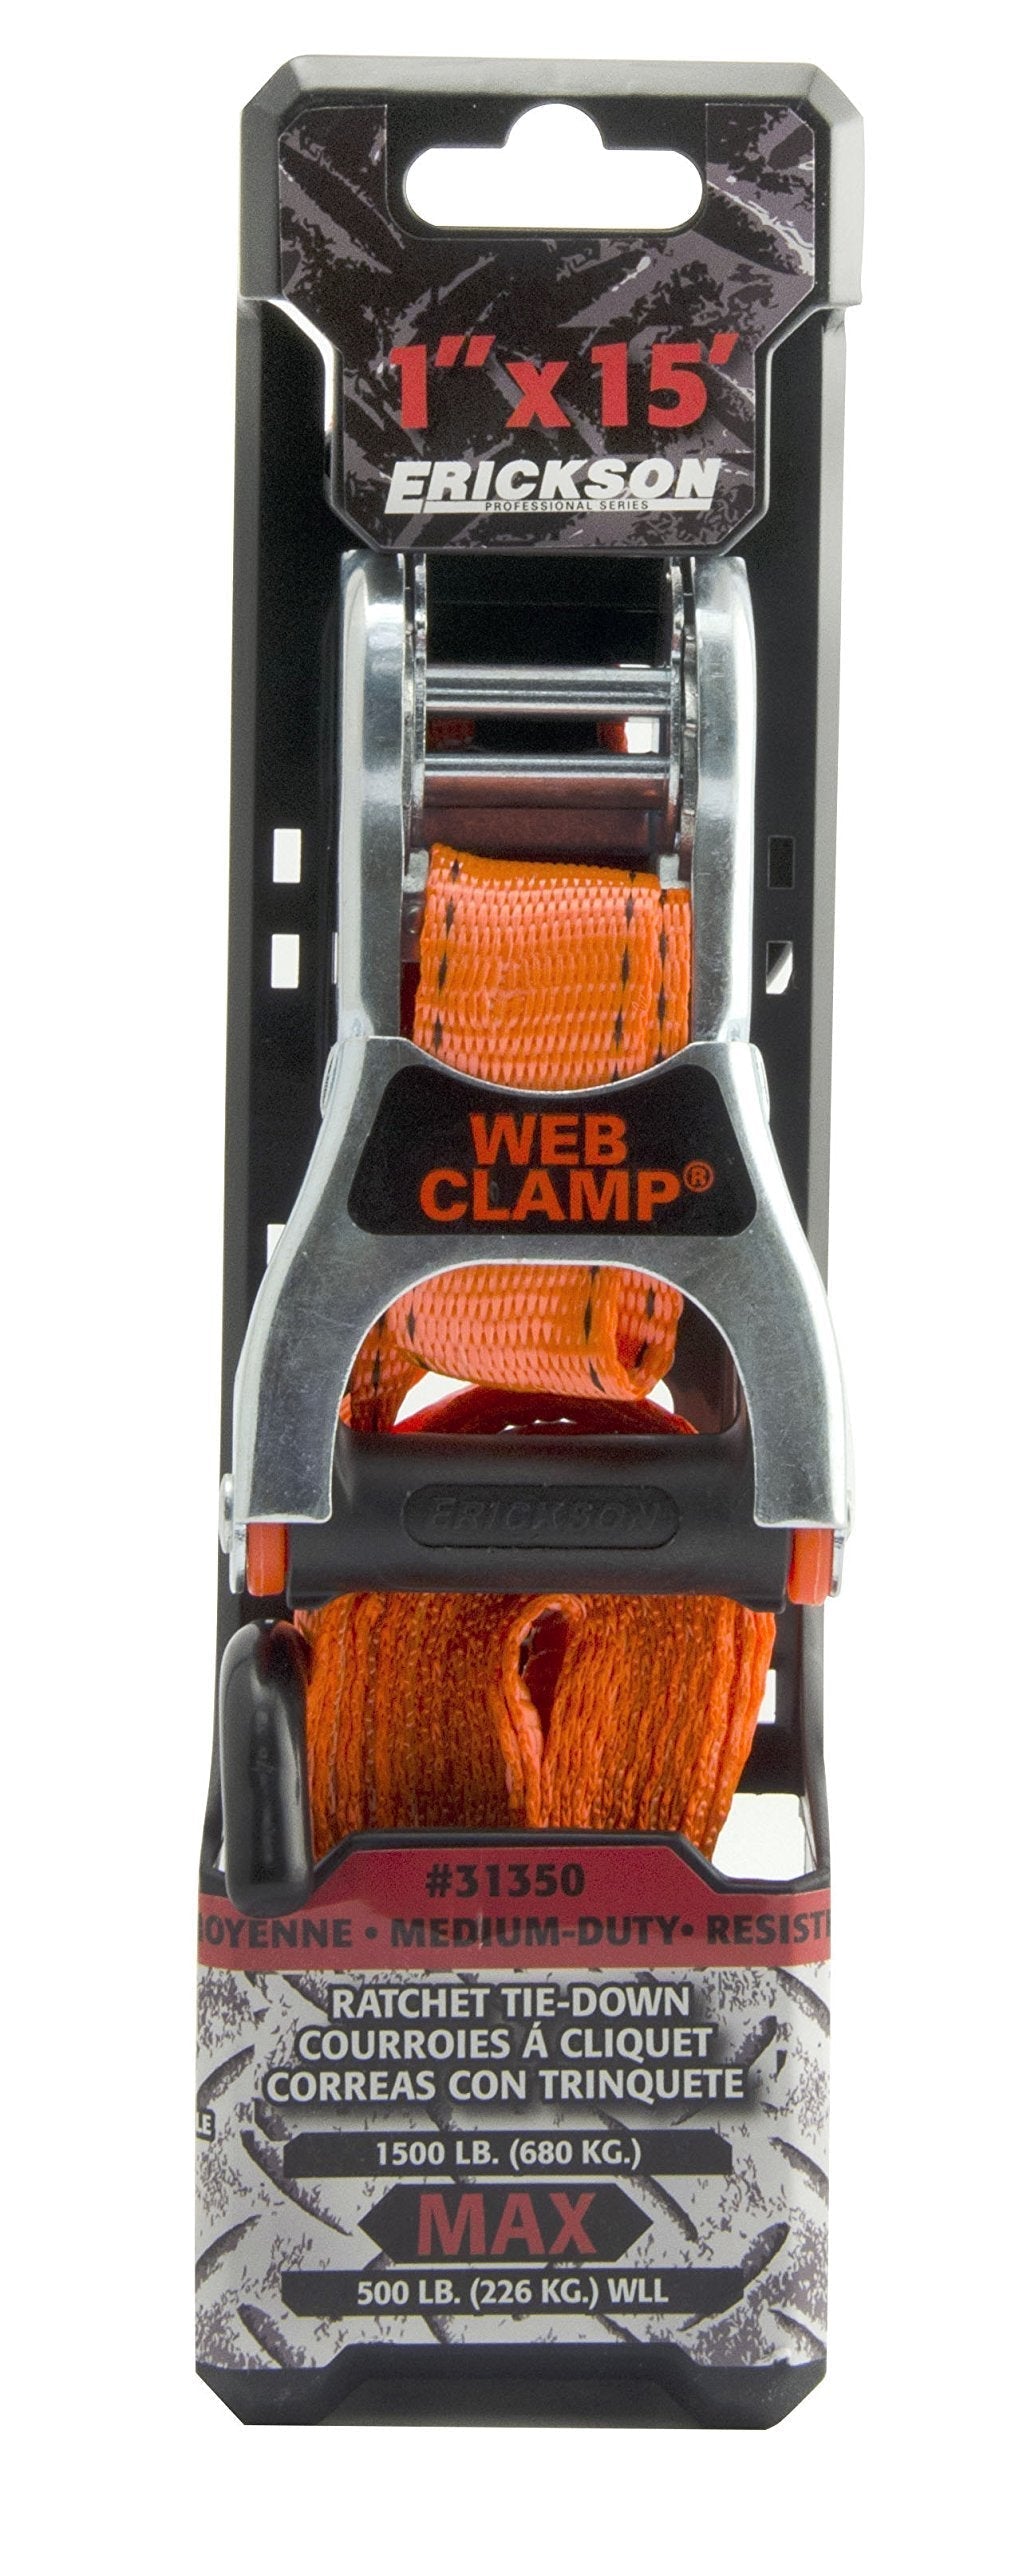  [AUSTRALIA] - Erickson 31350 Orange 1" X 15' Web Clamp Ratchet Tie-Down, 1500 lb. Load Capacity